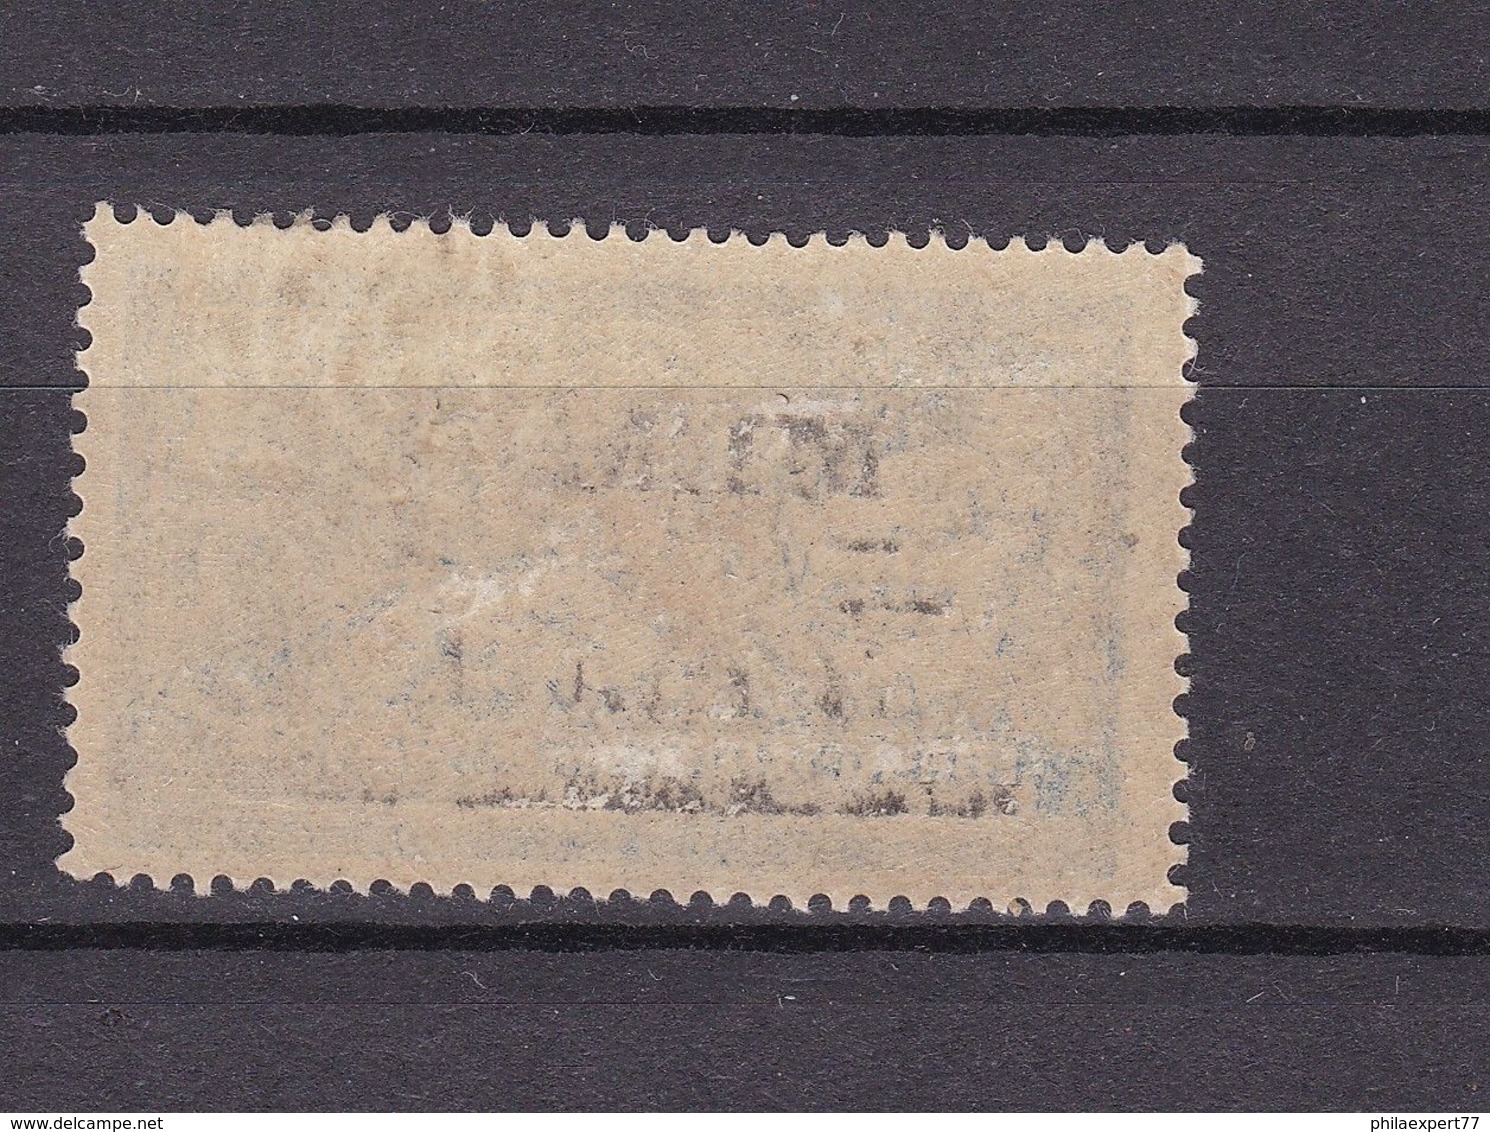 Memelgebiet - 1920/22 - Michel Nr. 30 - Ungebr. M. Falz - 40 Euro - Memelland 1923